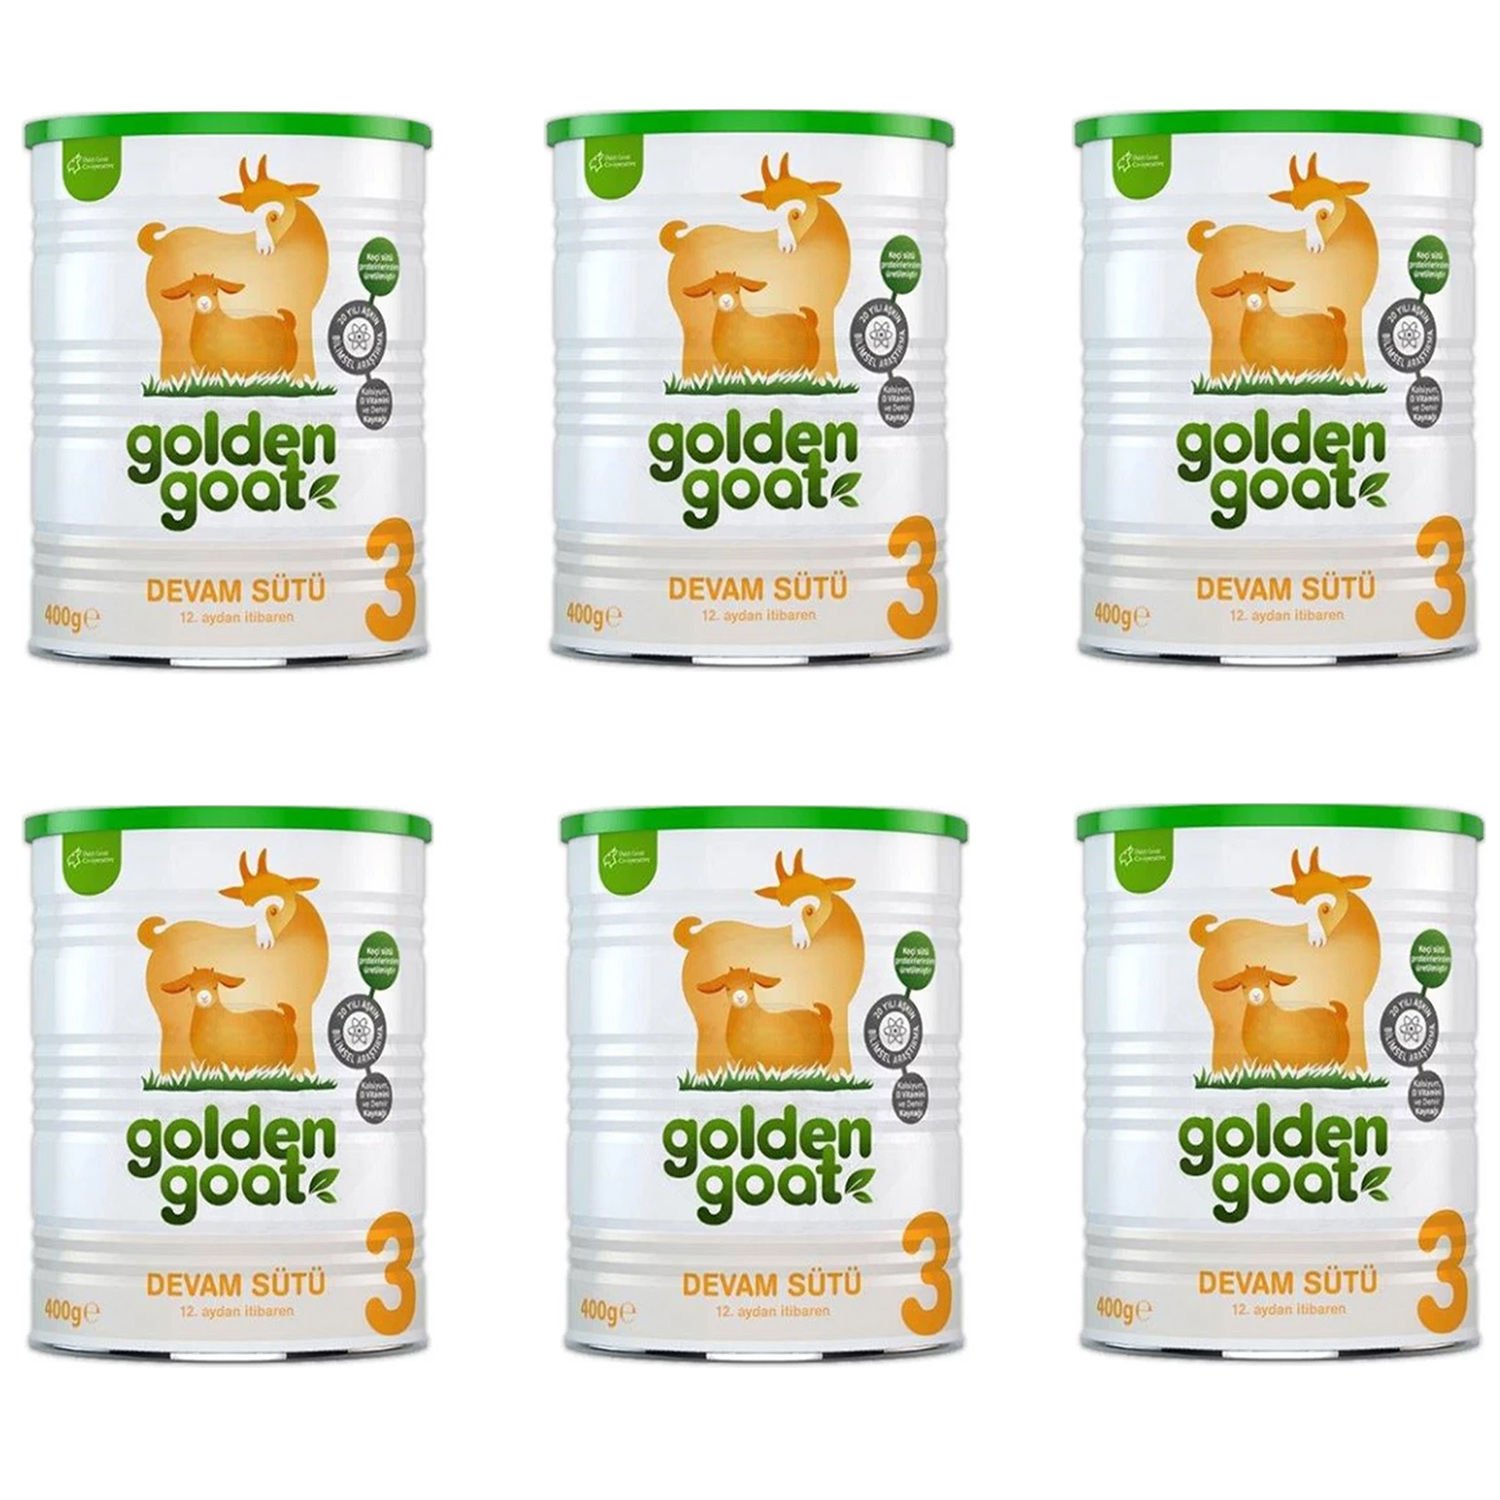 Golden Goat 3 Keçi Devam Sütü 400 gr 6 ADET